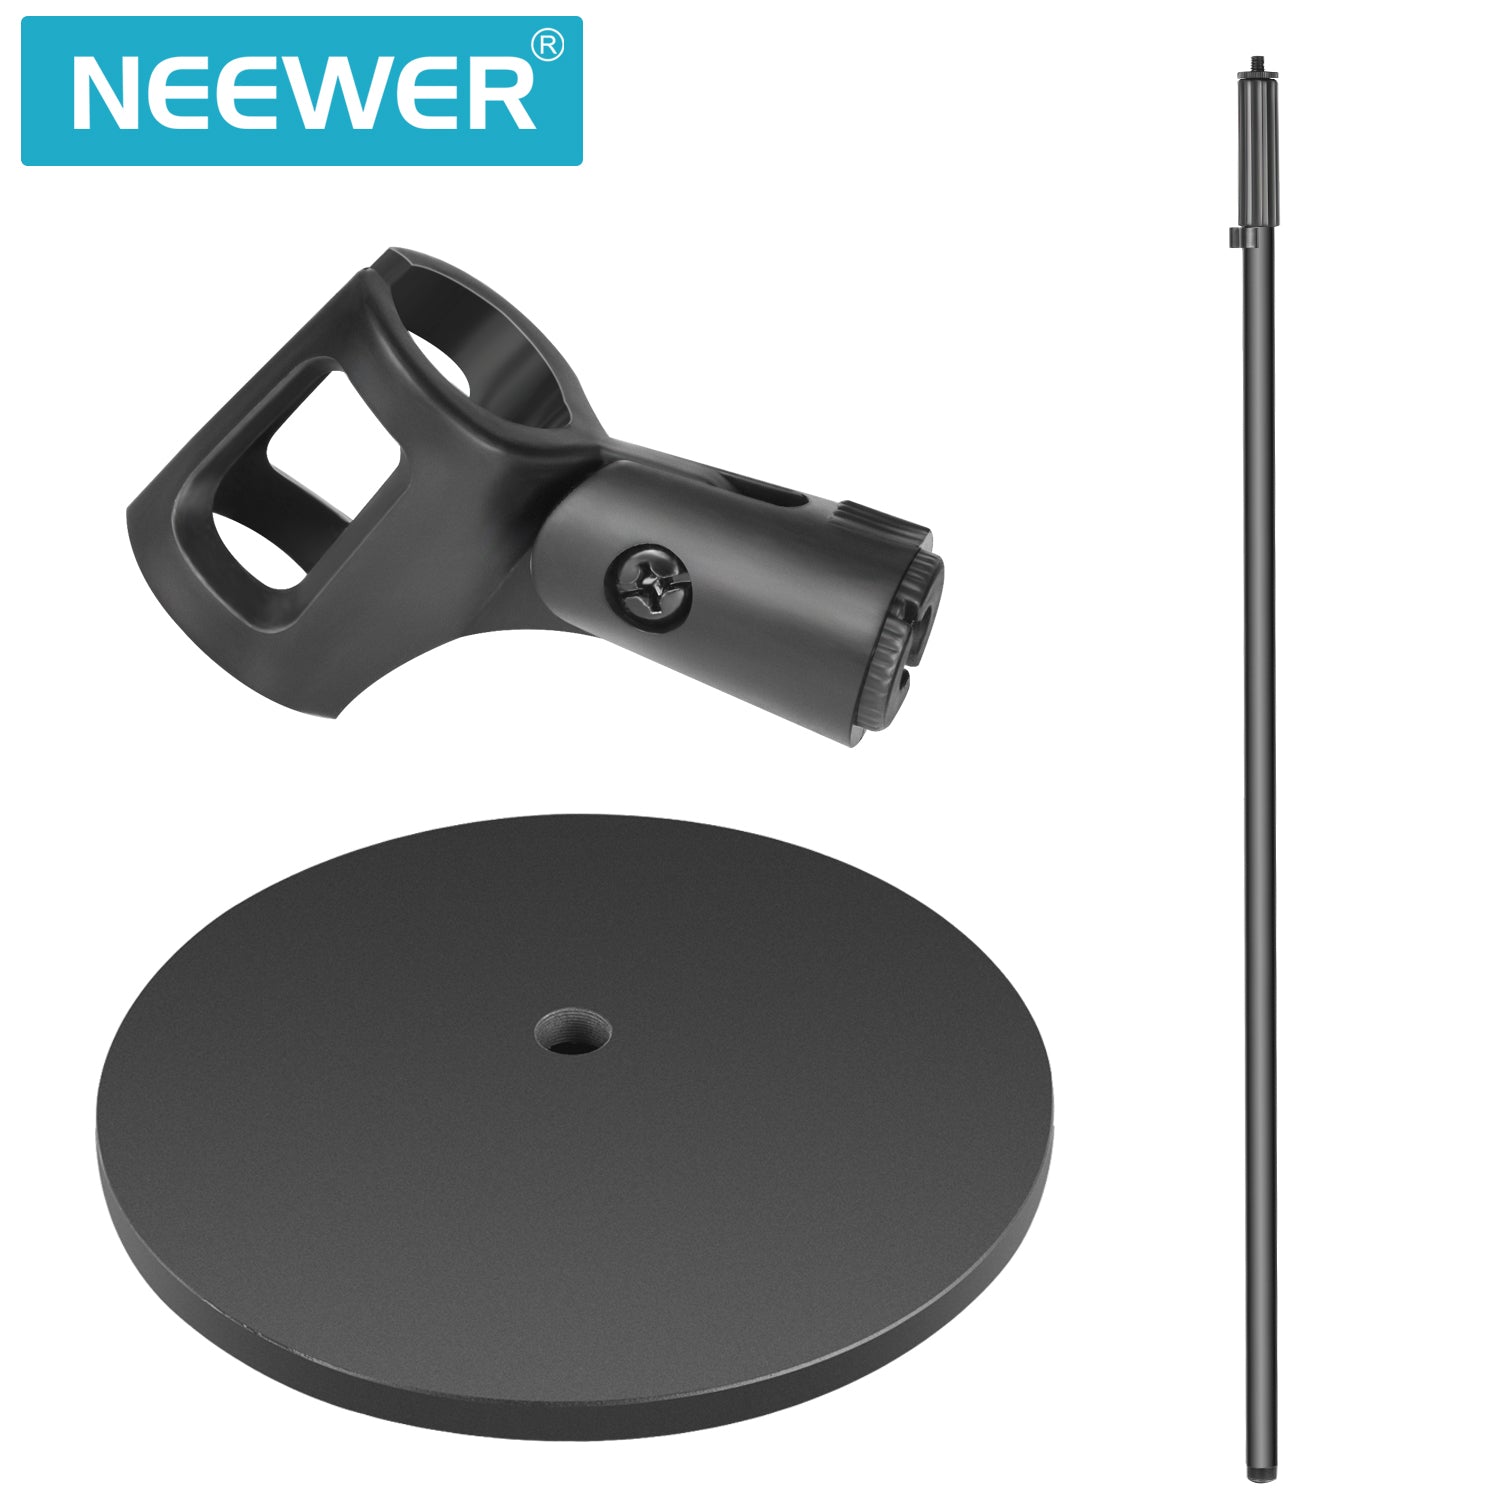 Compre Neower NW-051 Desktop Micrófono Soporte de Micrófono